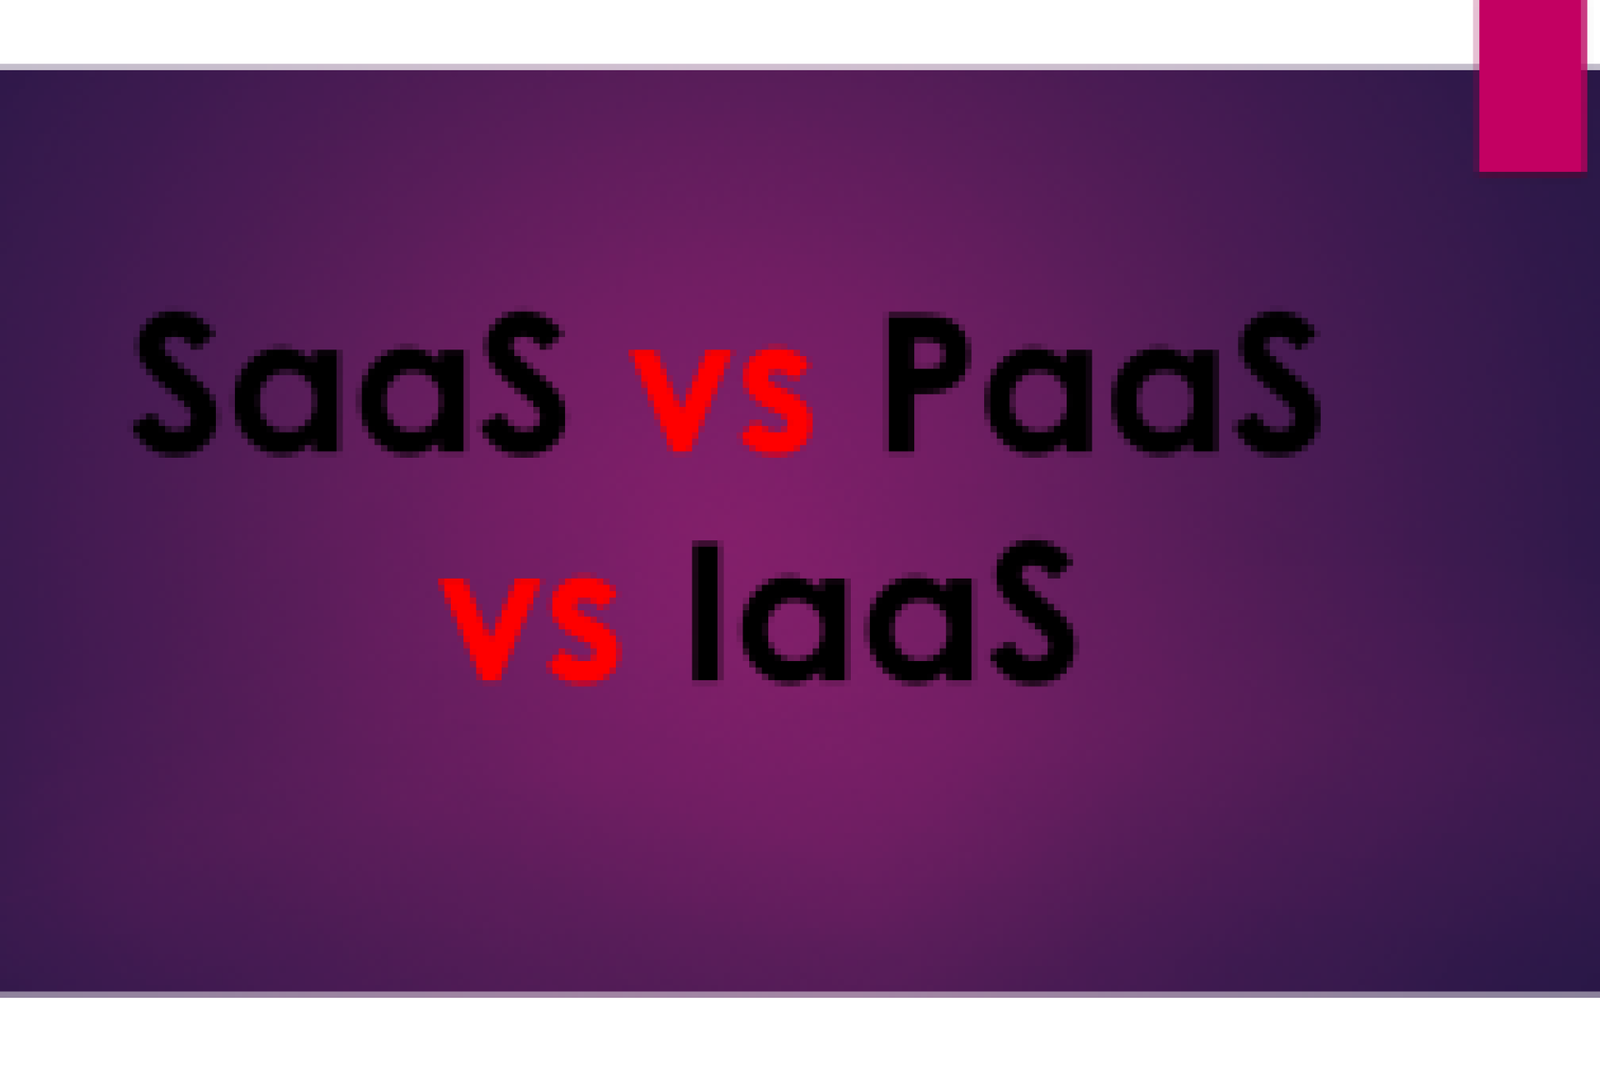 SaaS vs PaaS vs IaaS